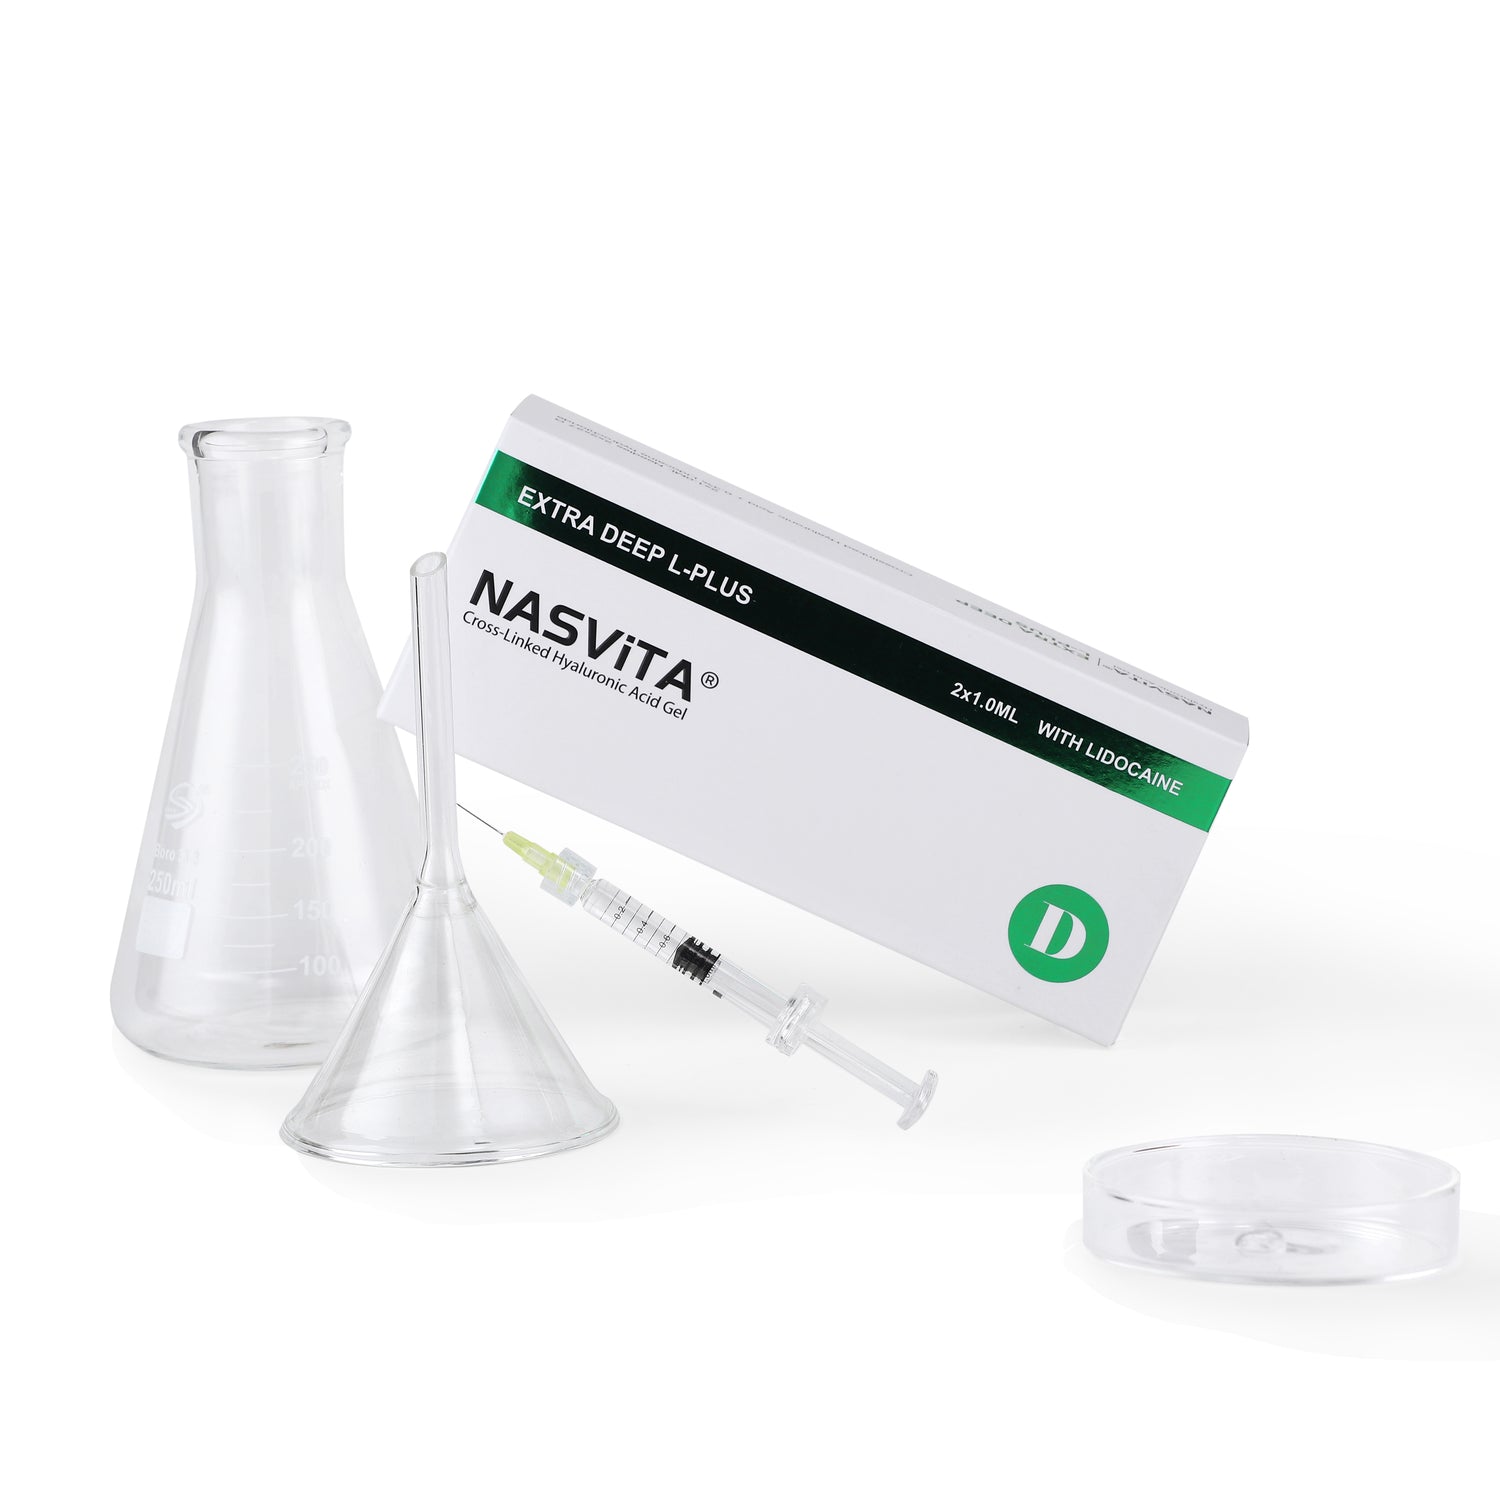 NASViTA EXTRA DEEP L-PLUS Hyaluronic Acid Filler with Lido for Deep Wrinkles 1 ml * 2 Syringes